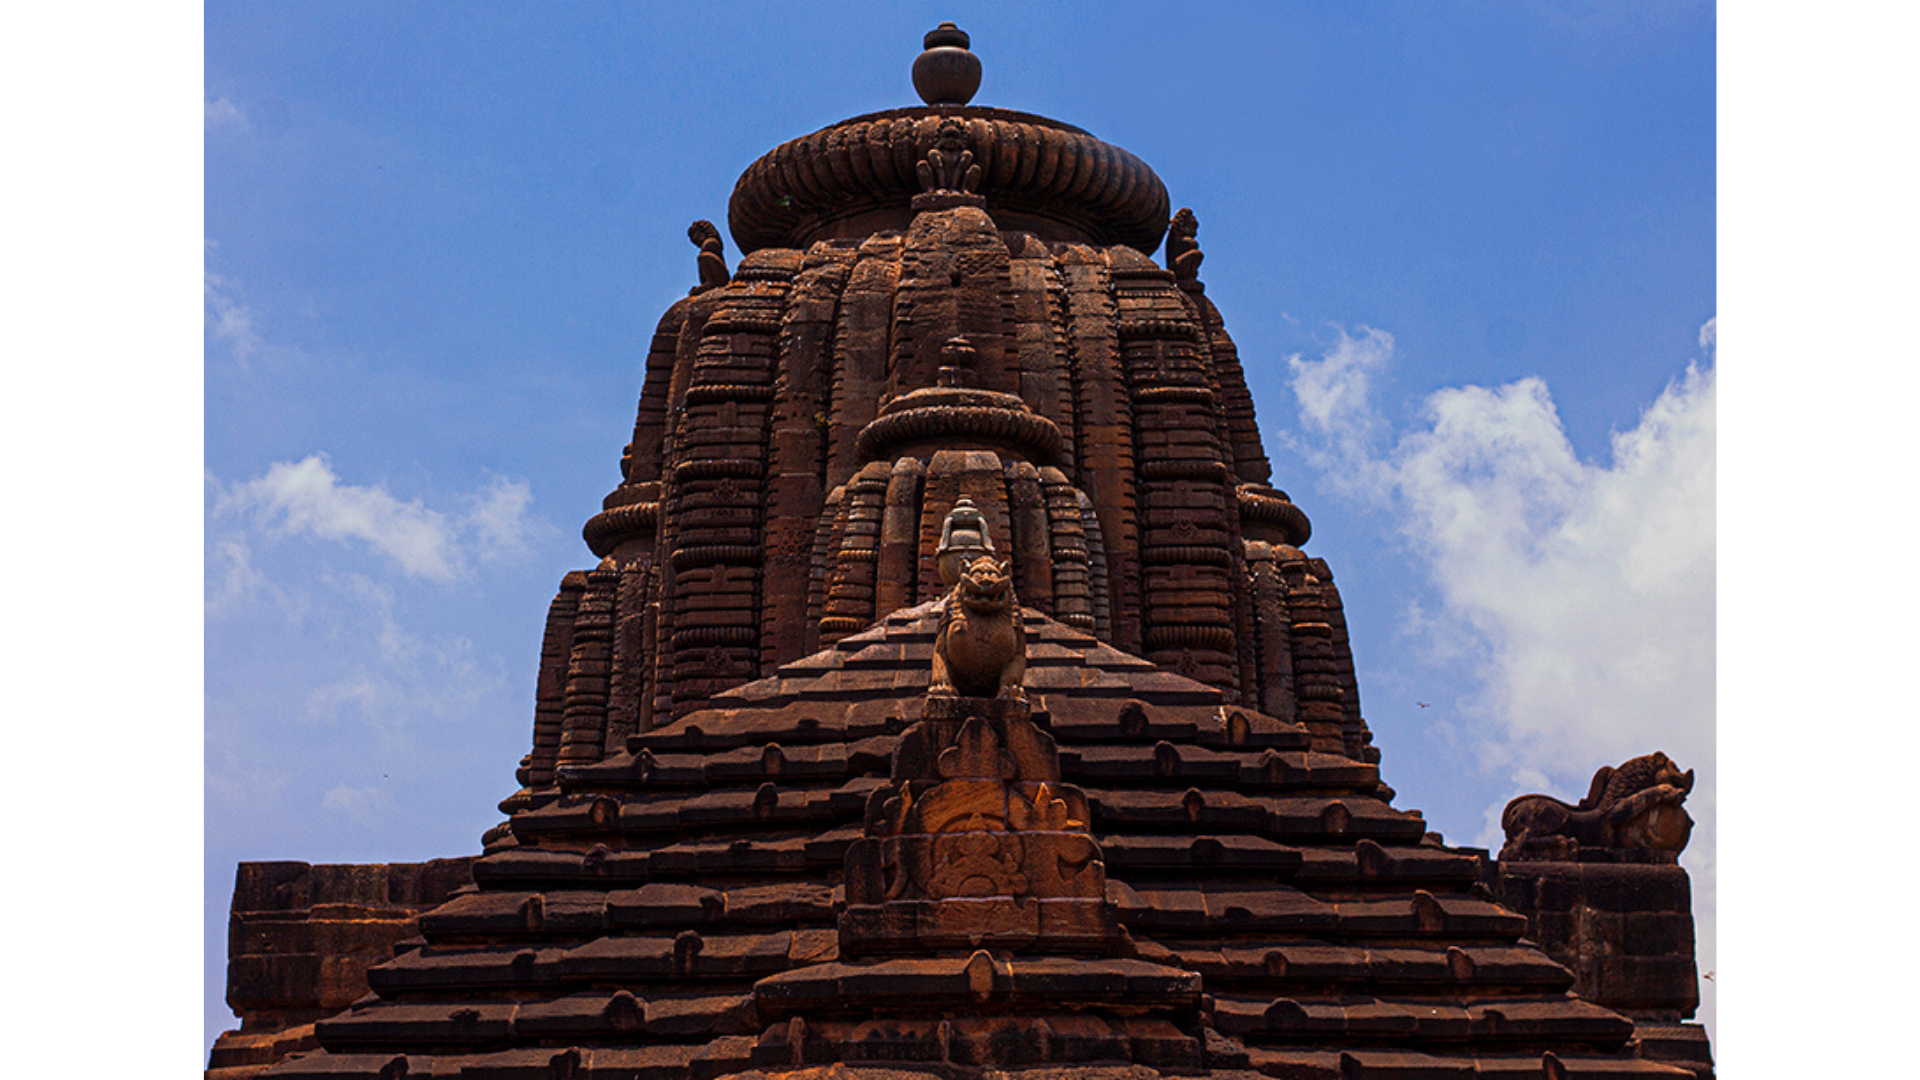 A lion guarding the entrance from atop the pyramidal jagamohana